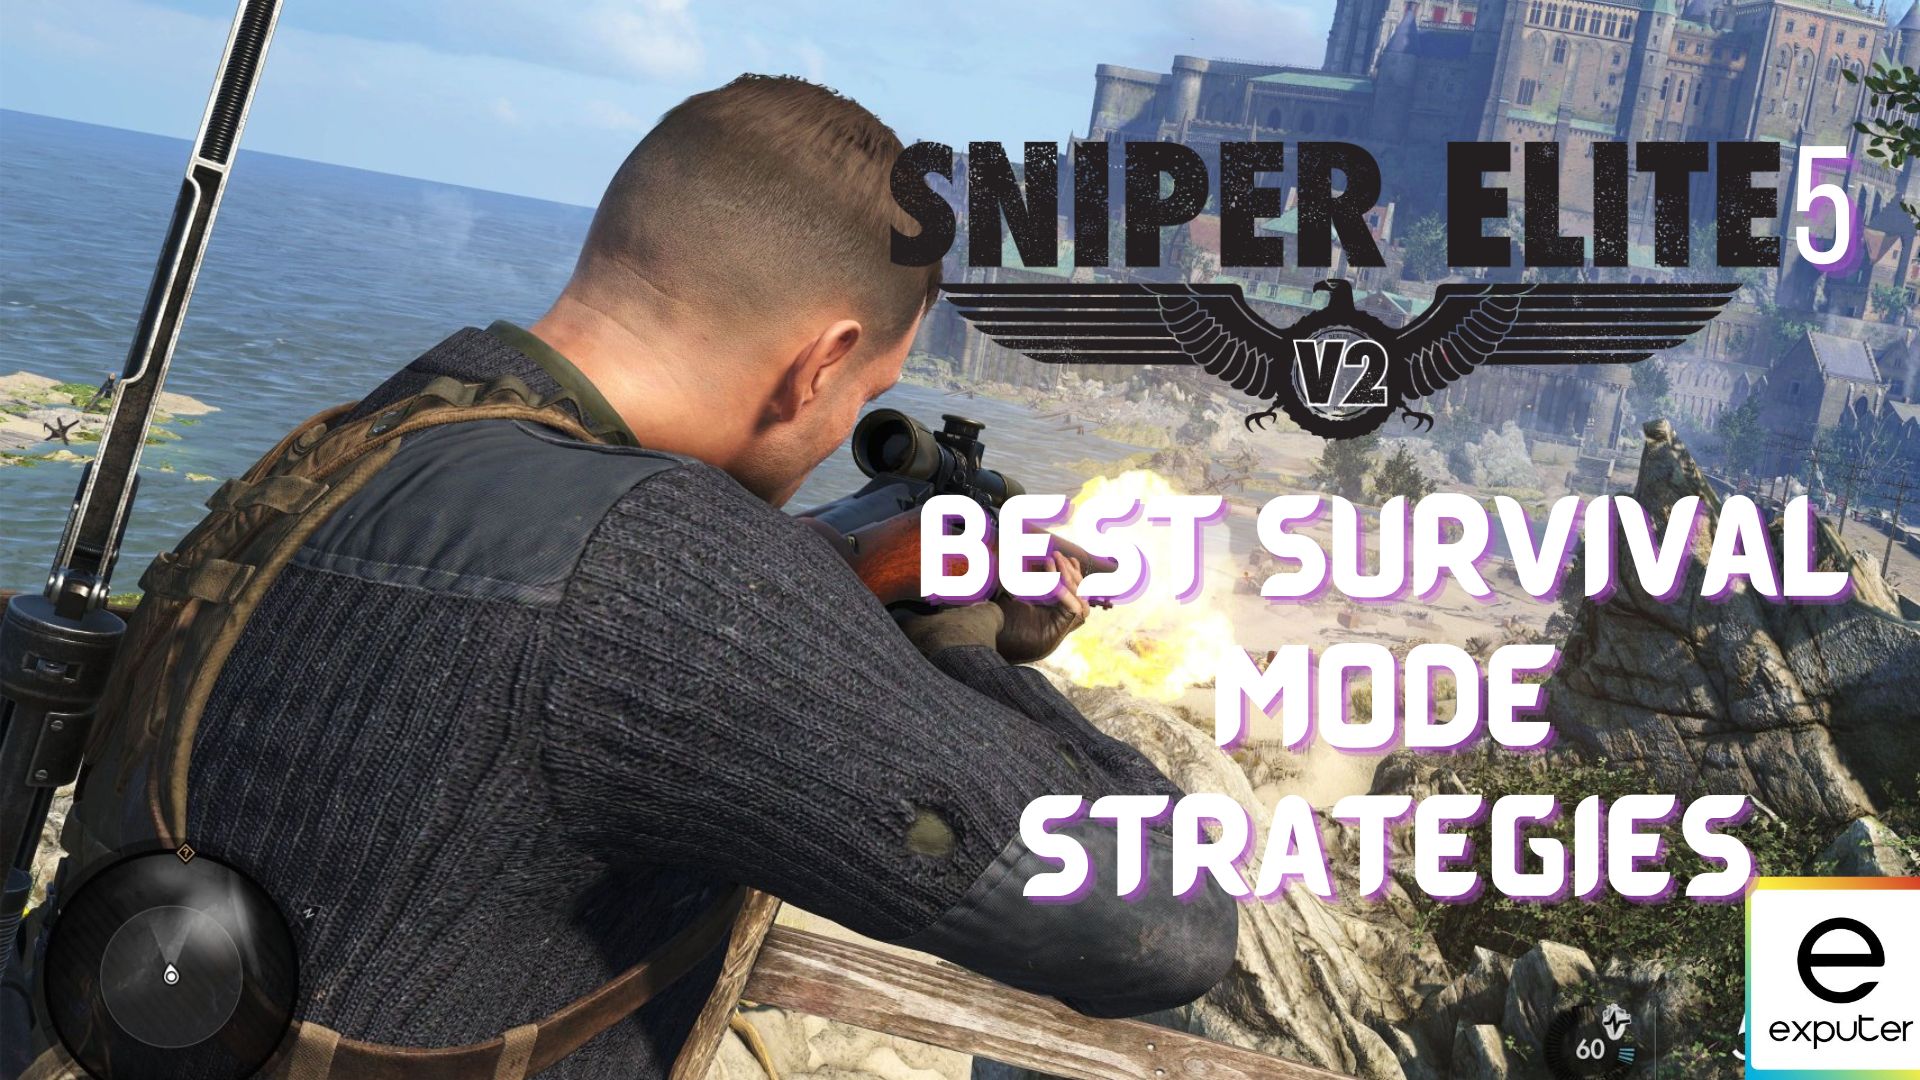 Sniper Elite 5: Best survival mode strategies